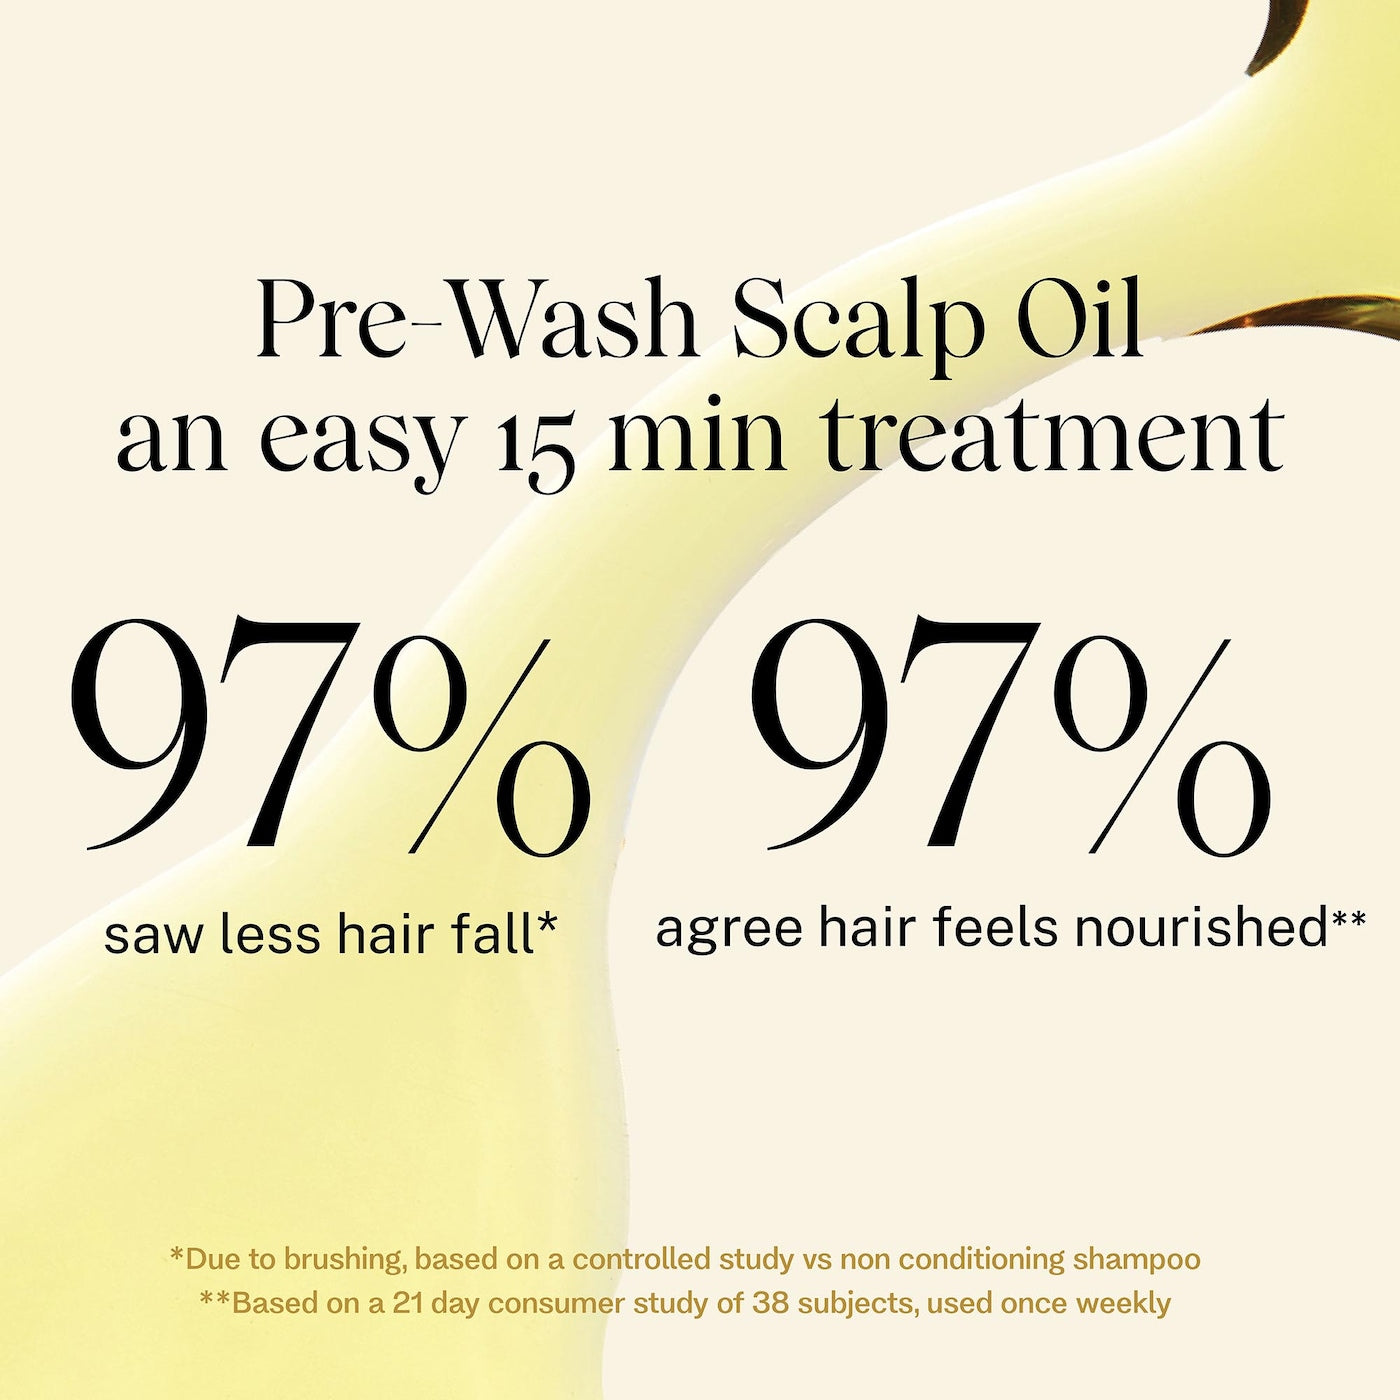 PREORDEN JVN - Complete Pre-Wash Scalp & Hair Treatment Oil